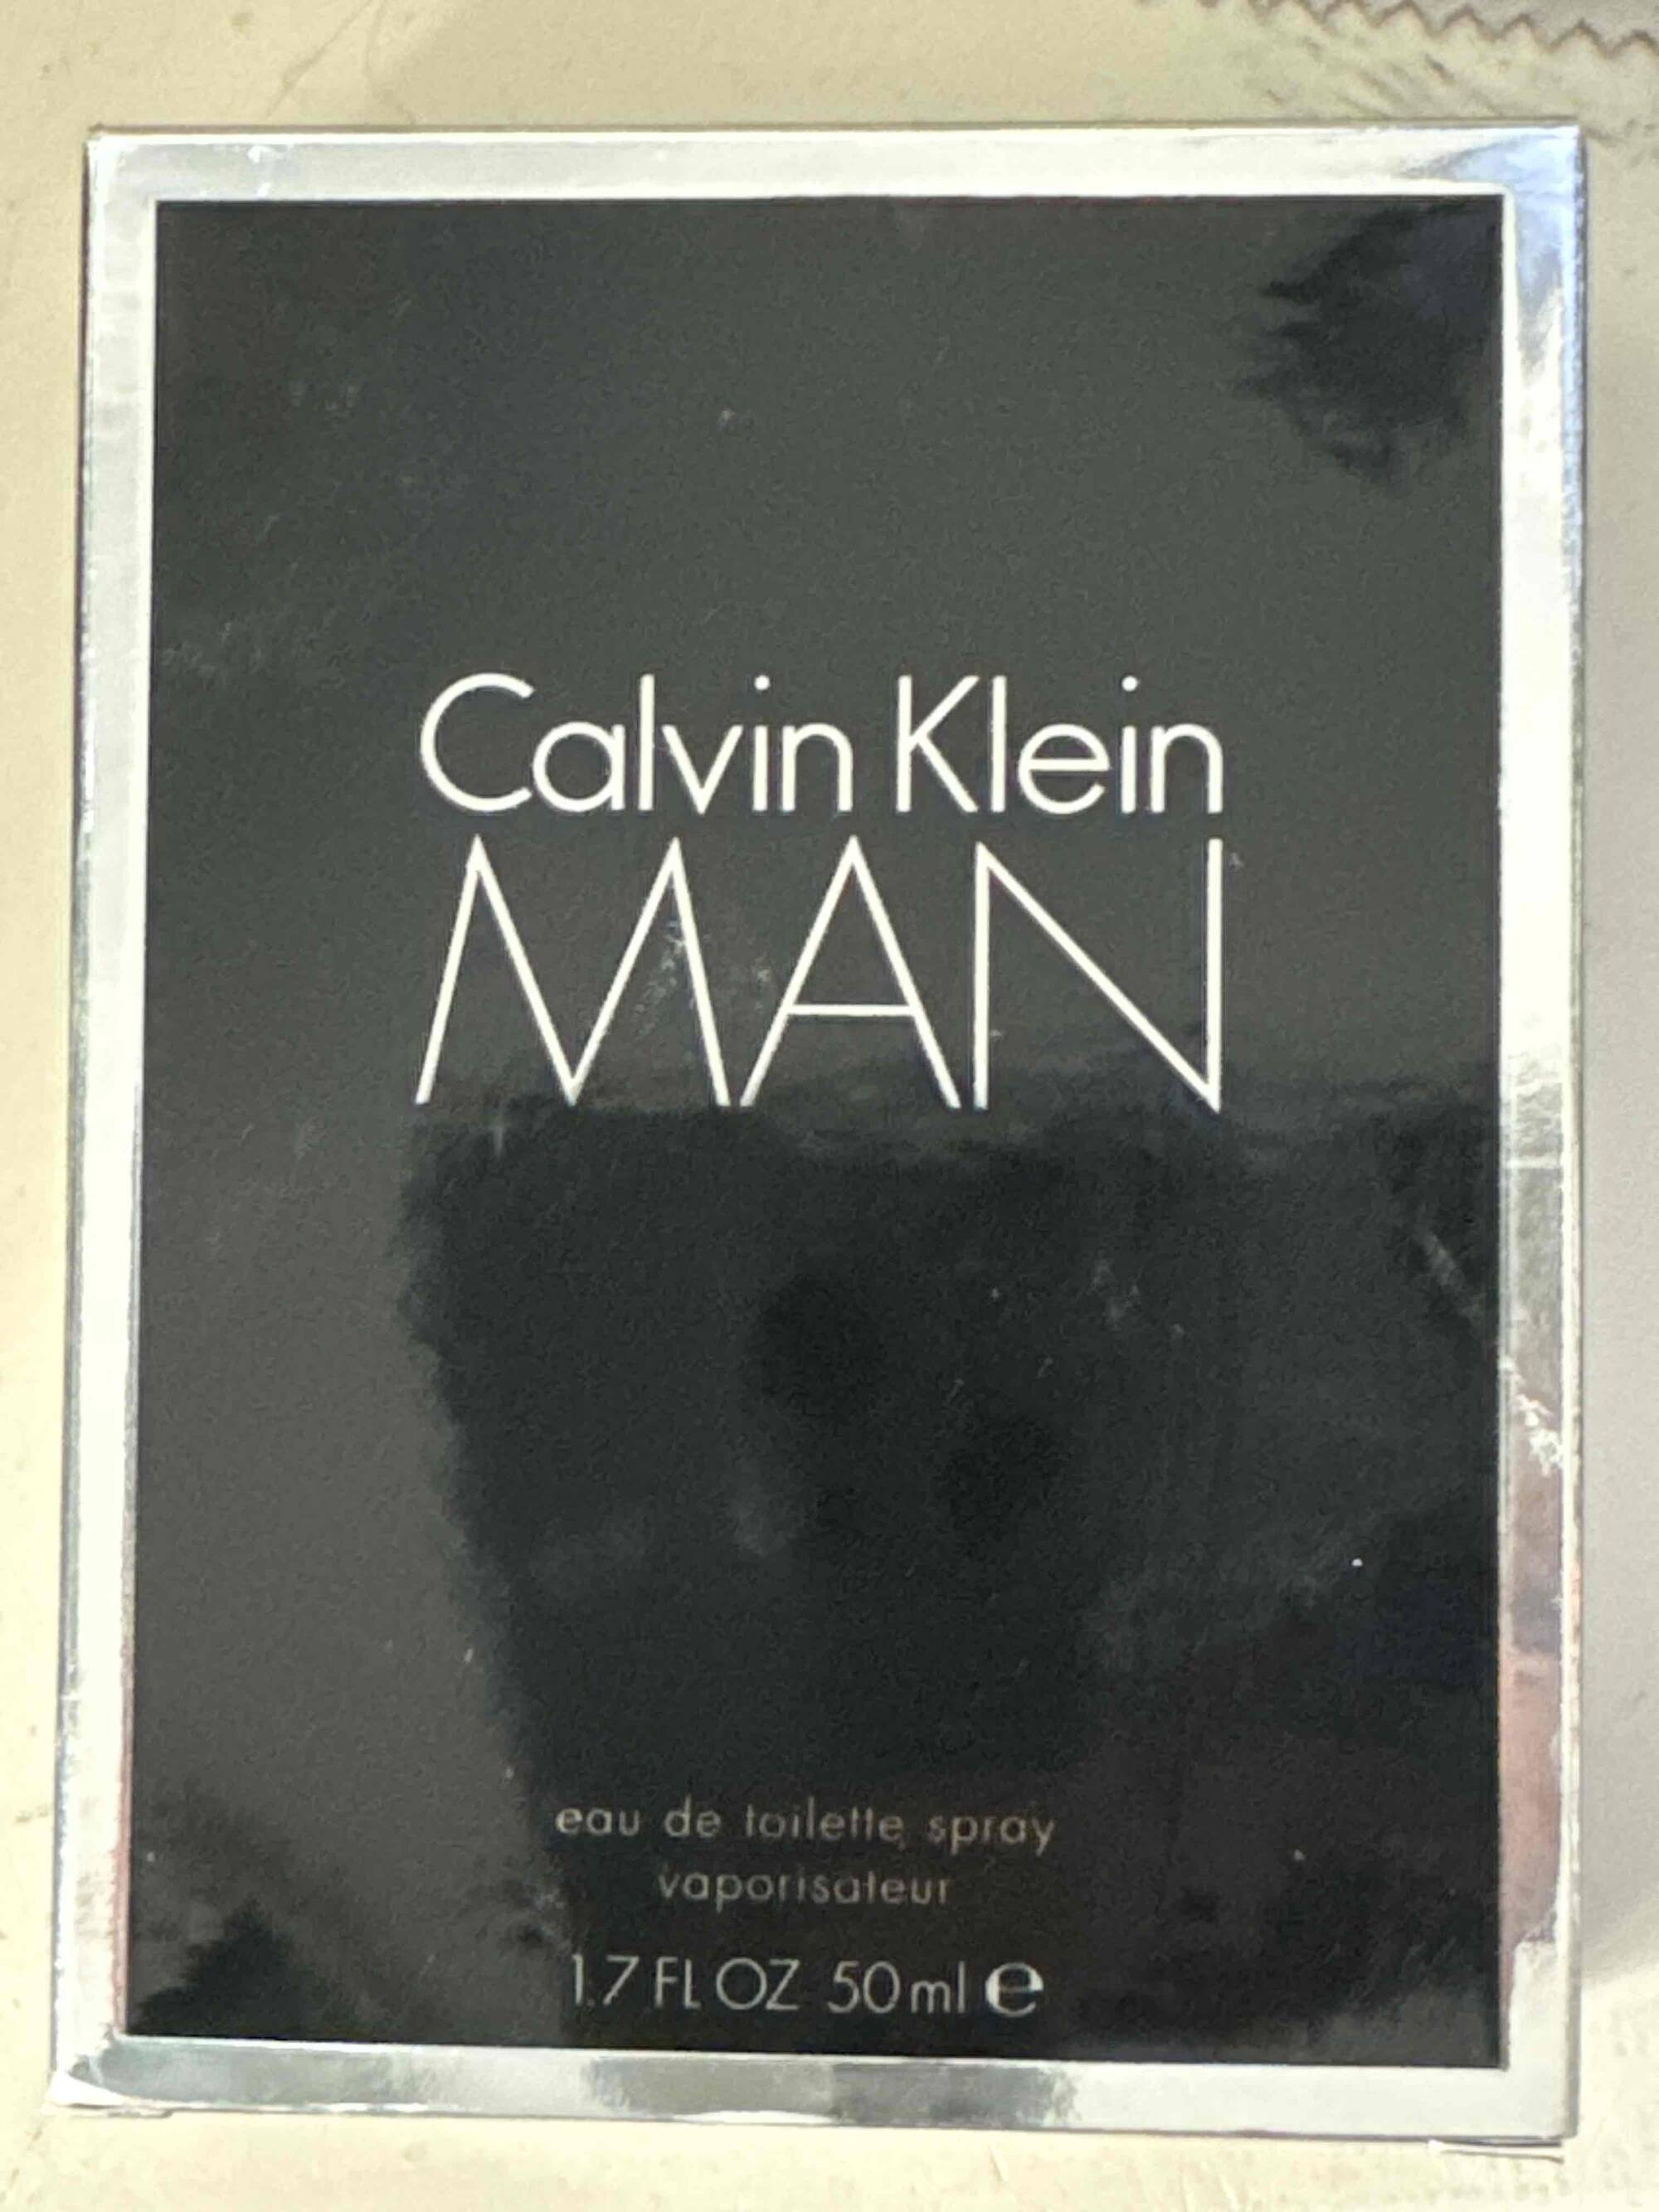 CALVIN KLEIN - Man - Eau de toilette spray vaporisateur